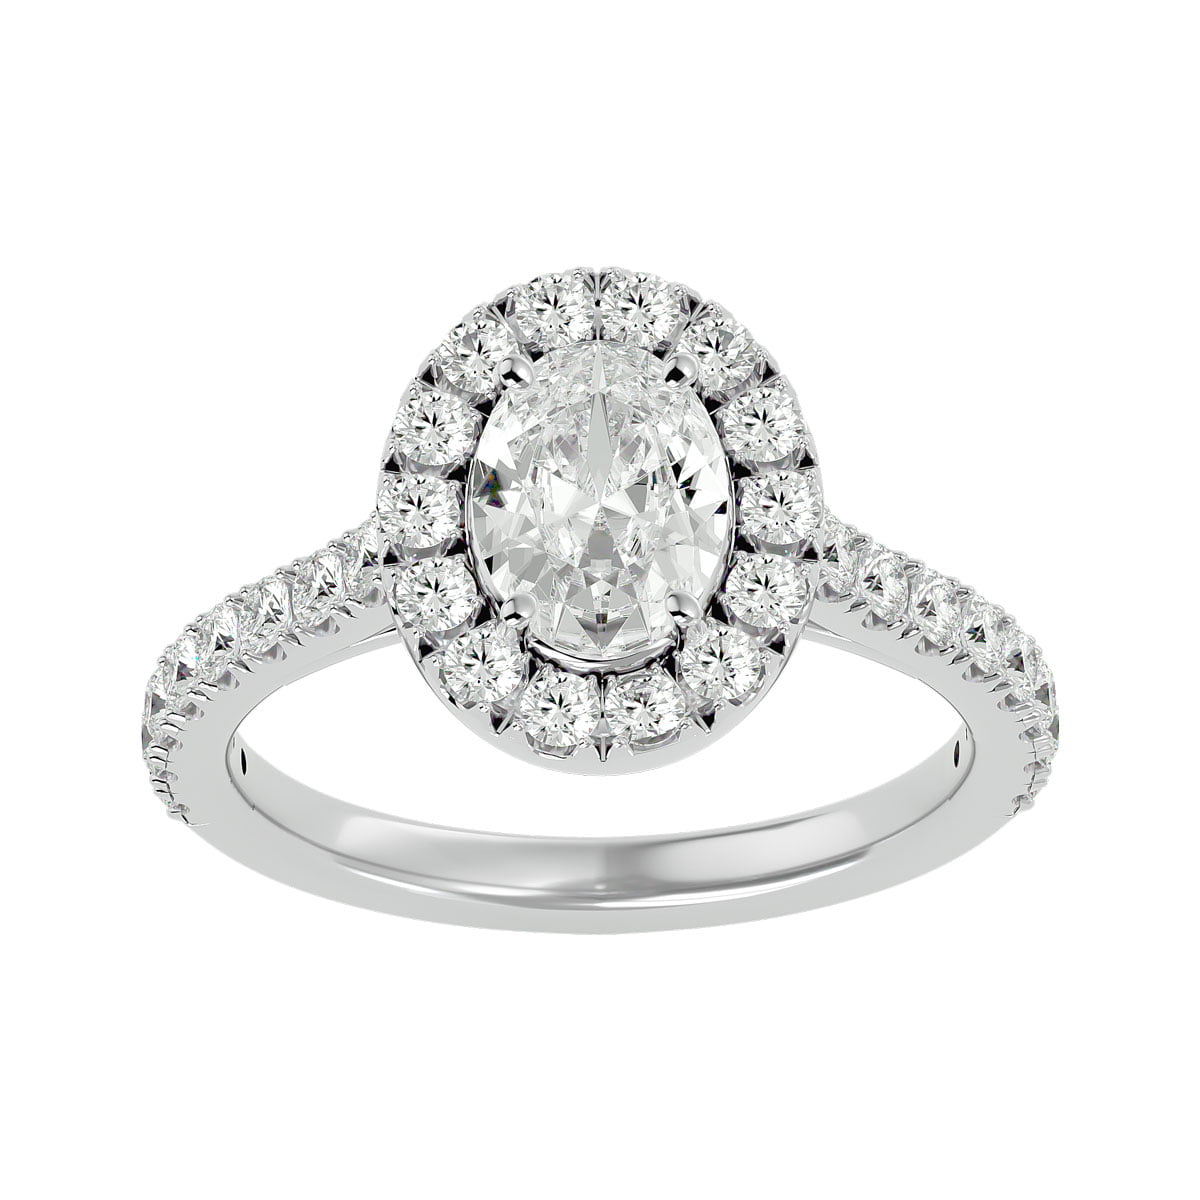 Jubilation Diamond Halo Engagement Ring in 14K White Gold | Shane Co.